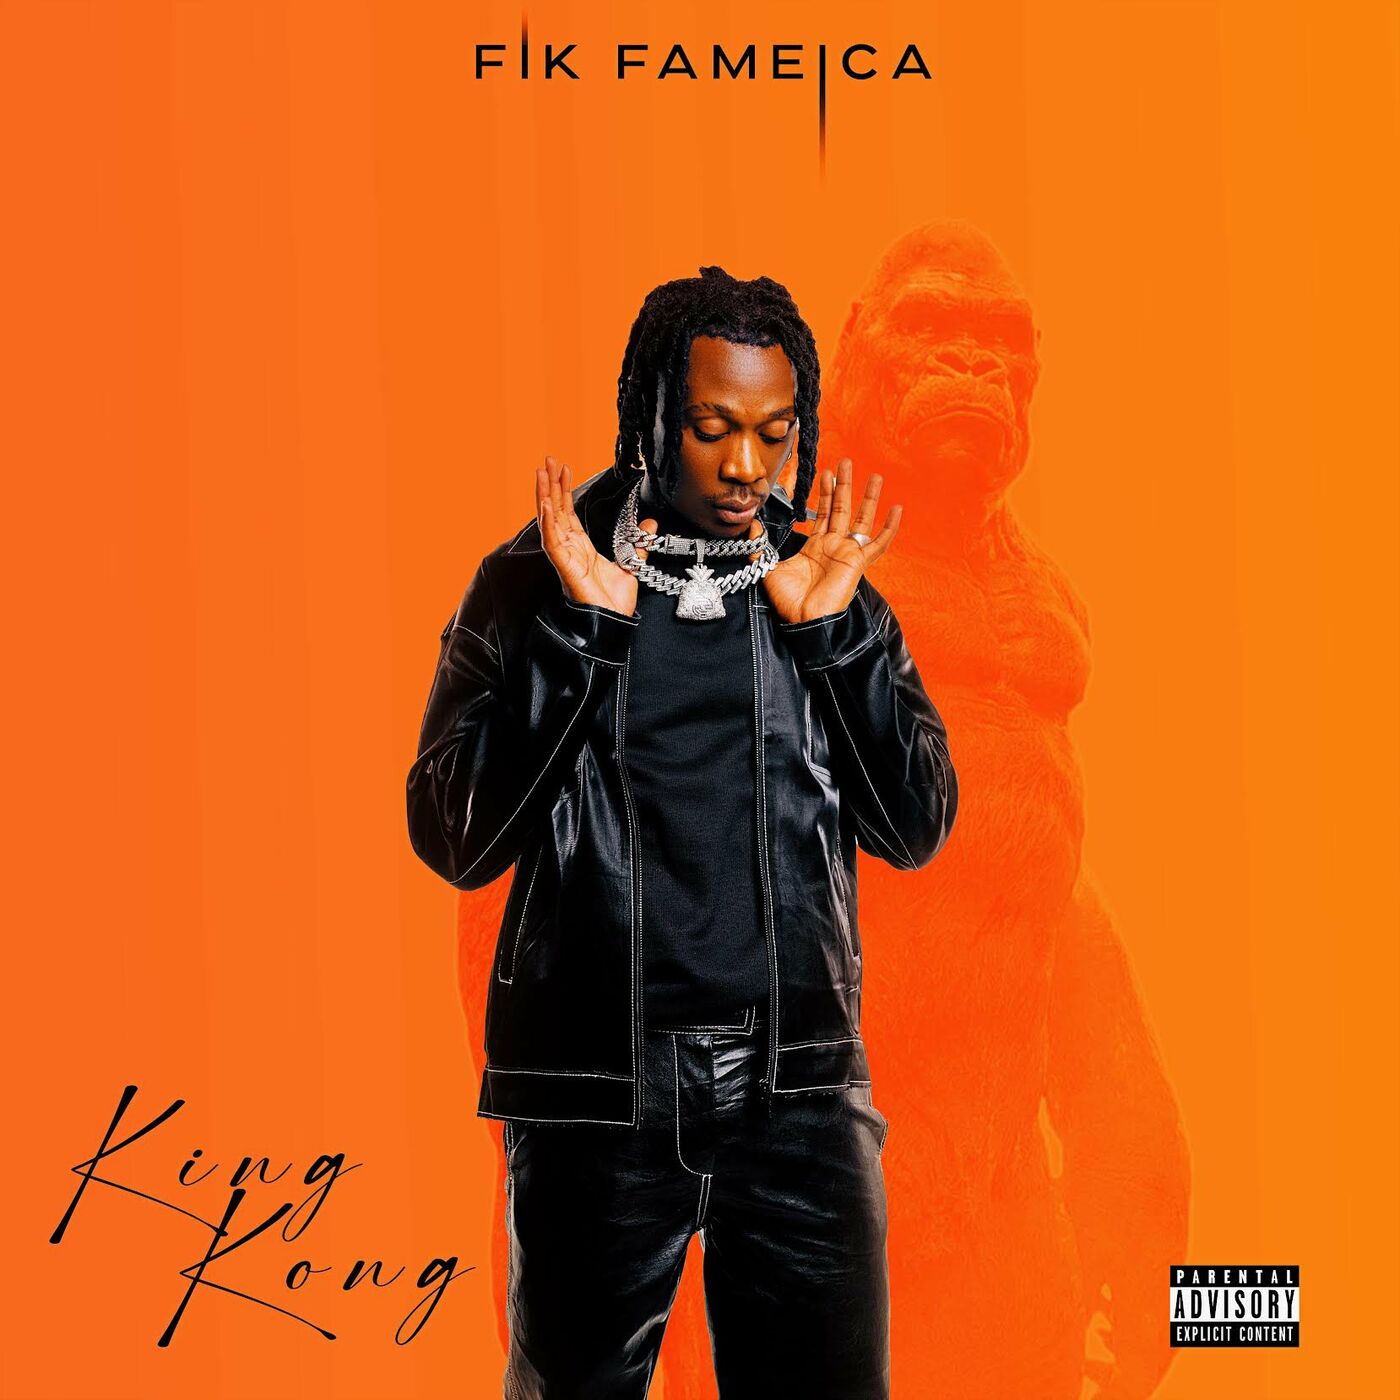 fik-fameica-one-love-album-cover